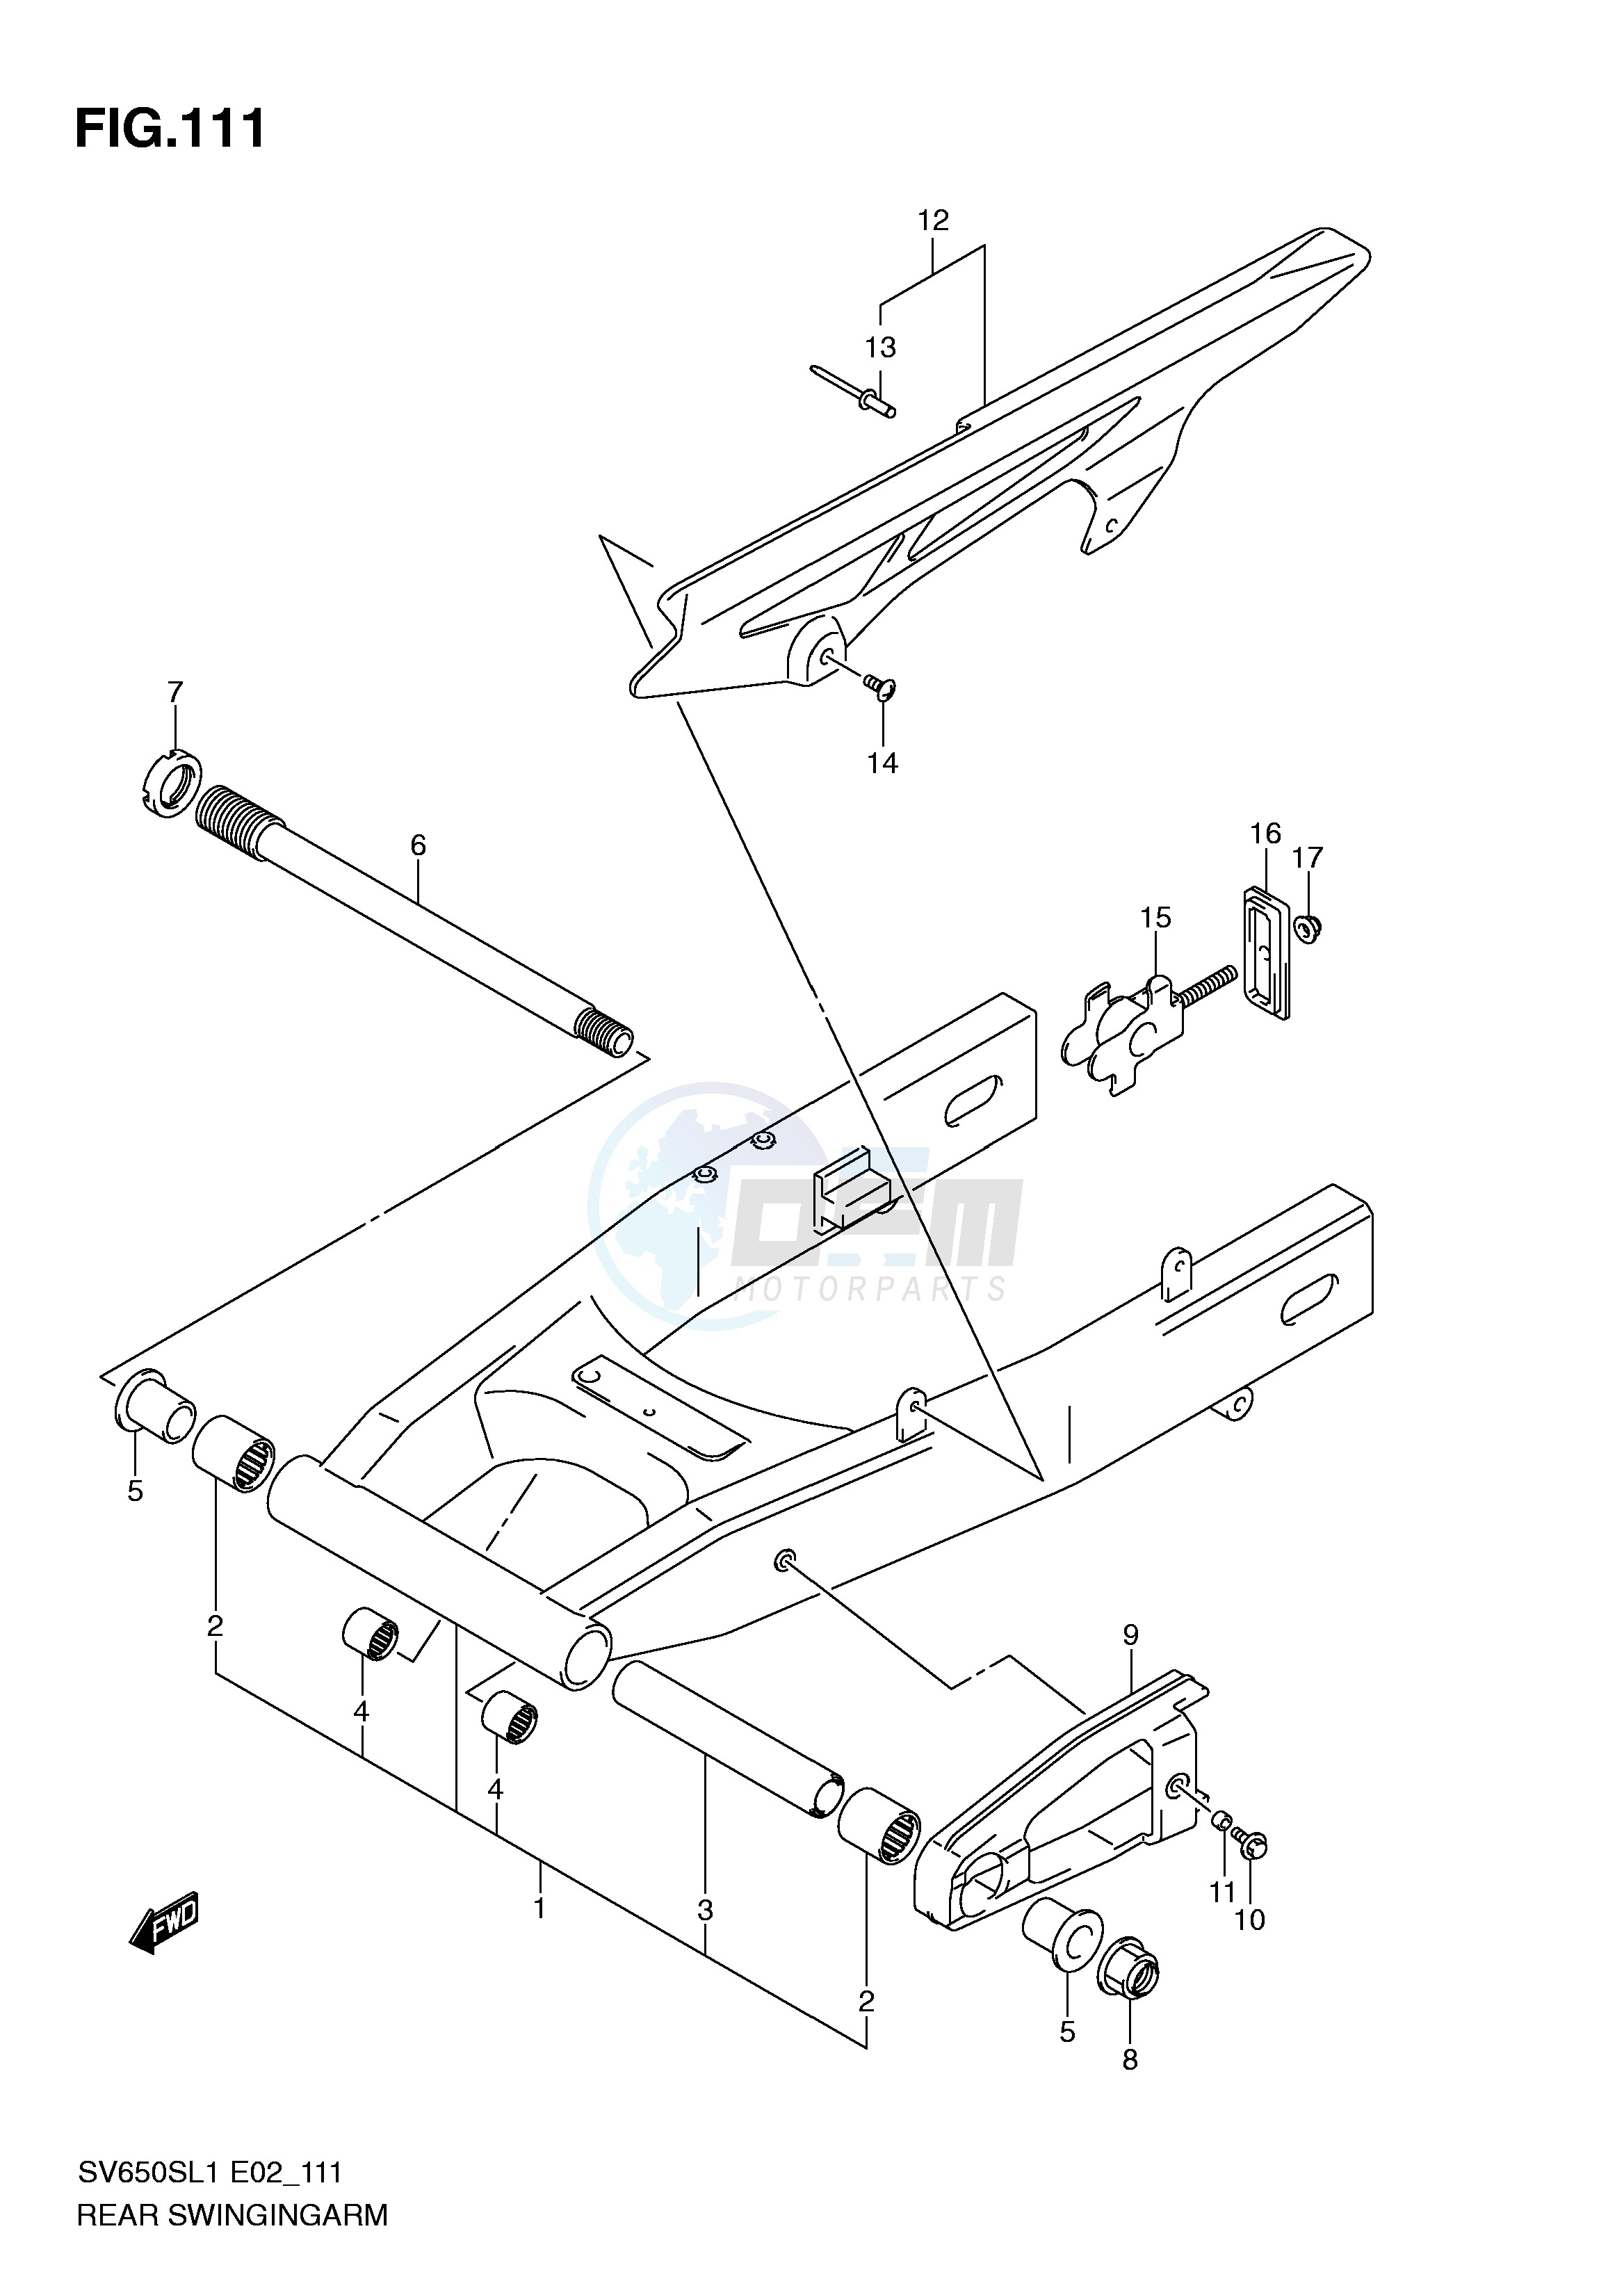 REAR SWINGING ARM (SV650SL1 E24) blueprint